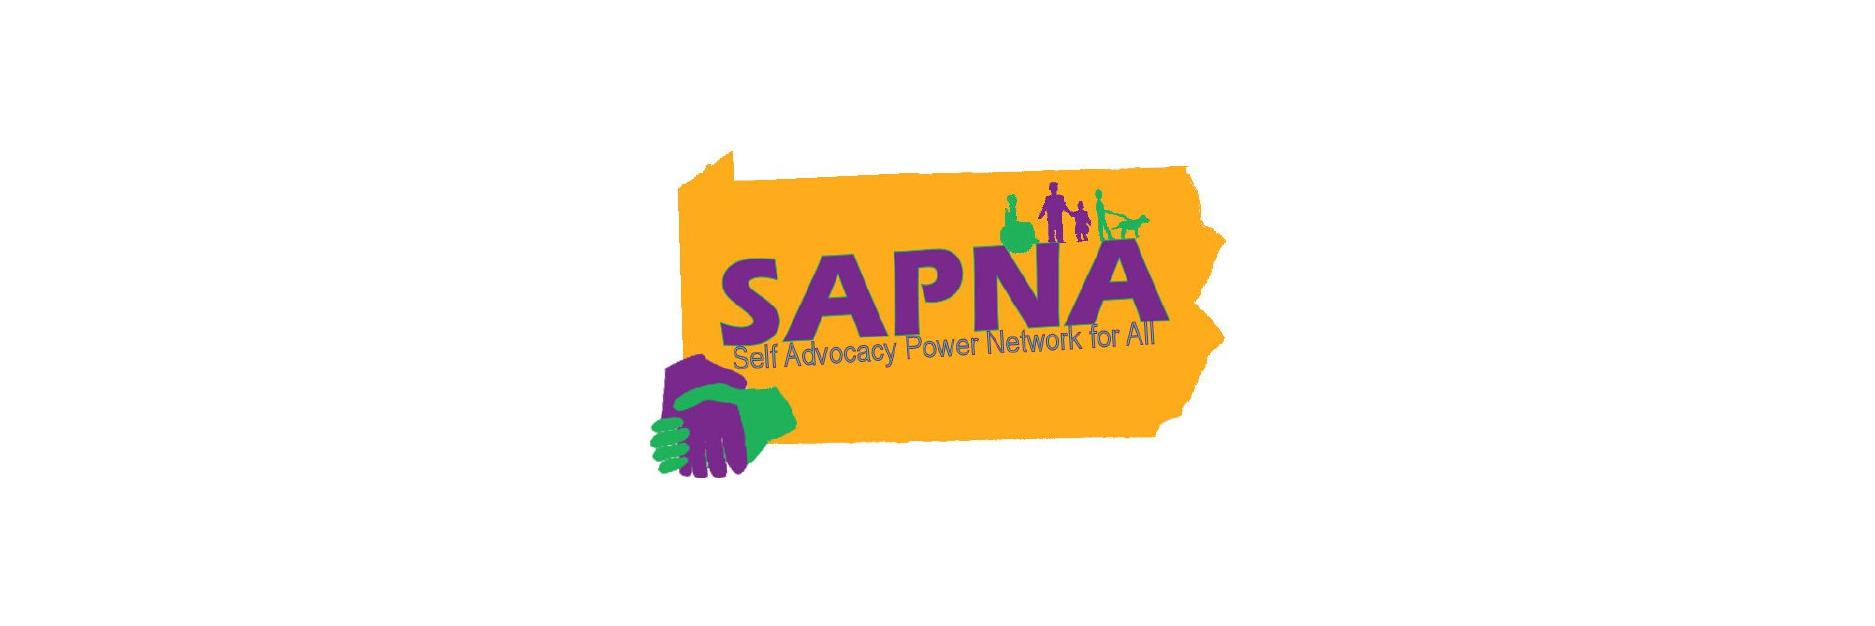 Self Advocacy Power Network for All (SAPNA) Logo